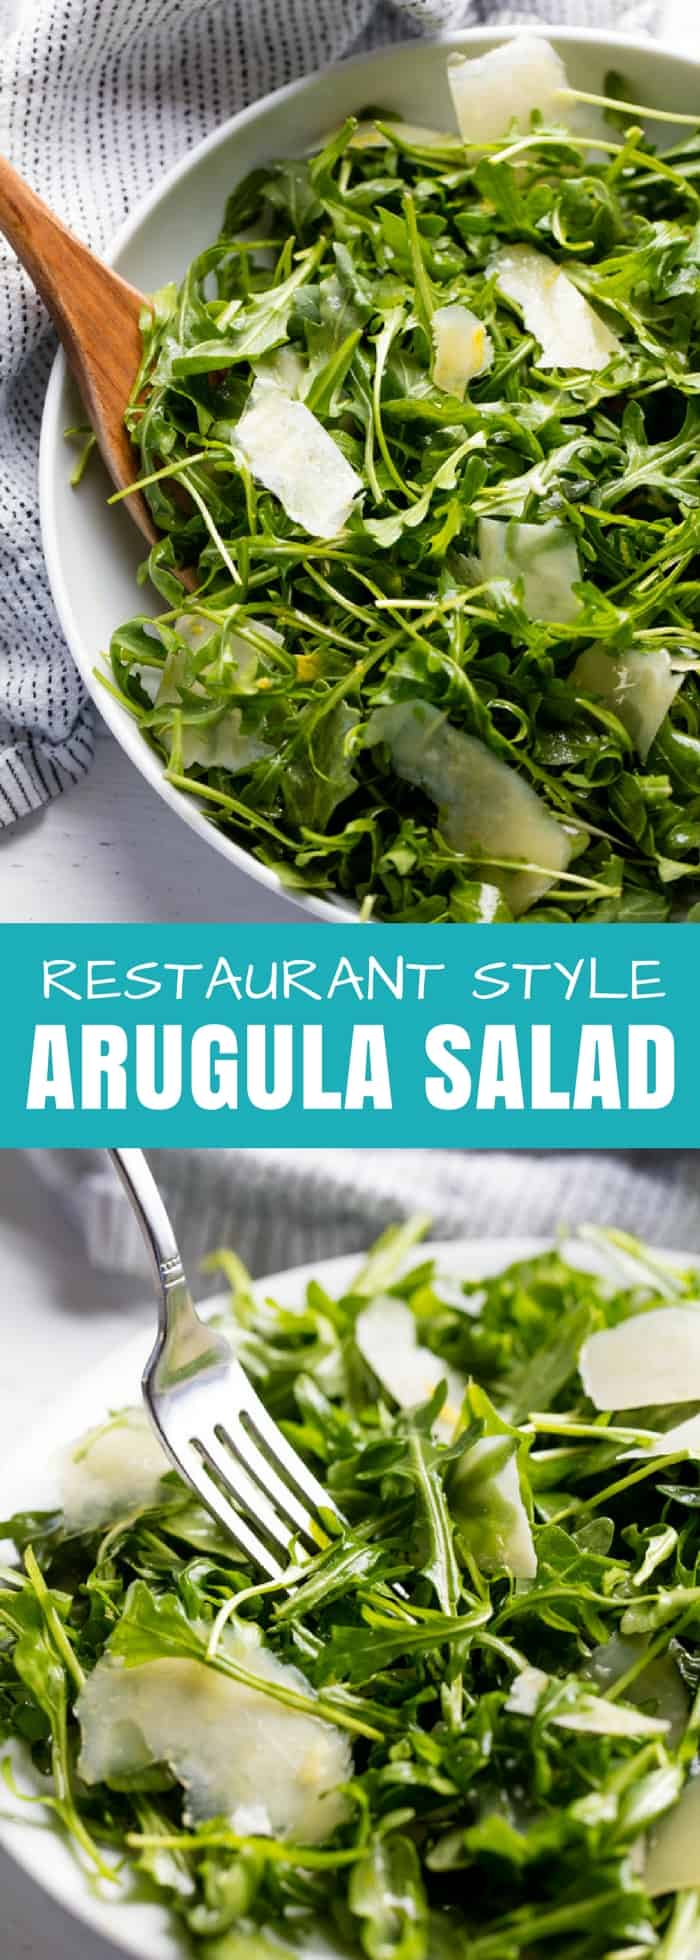 Restaurant Style Arugula Salad